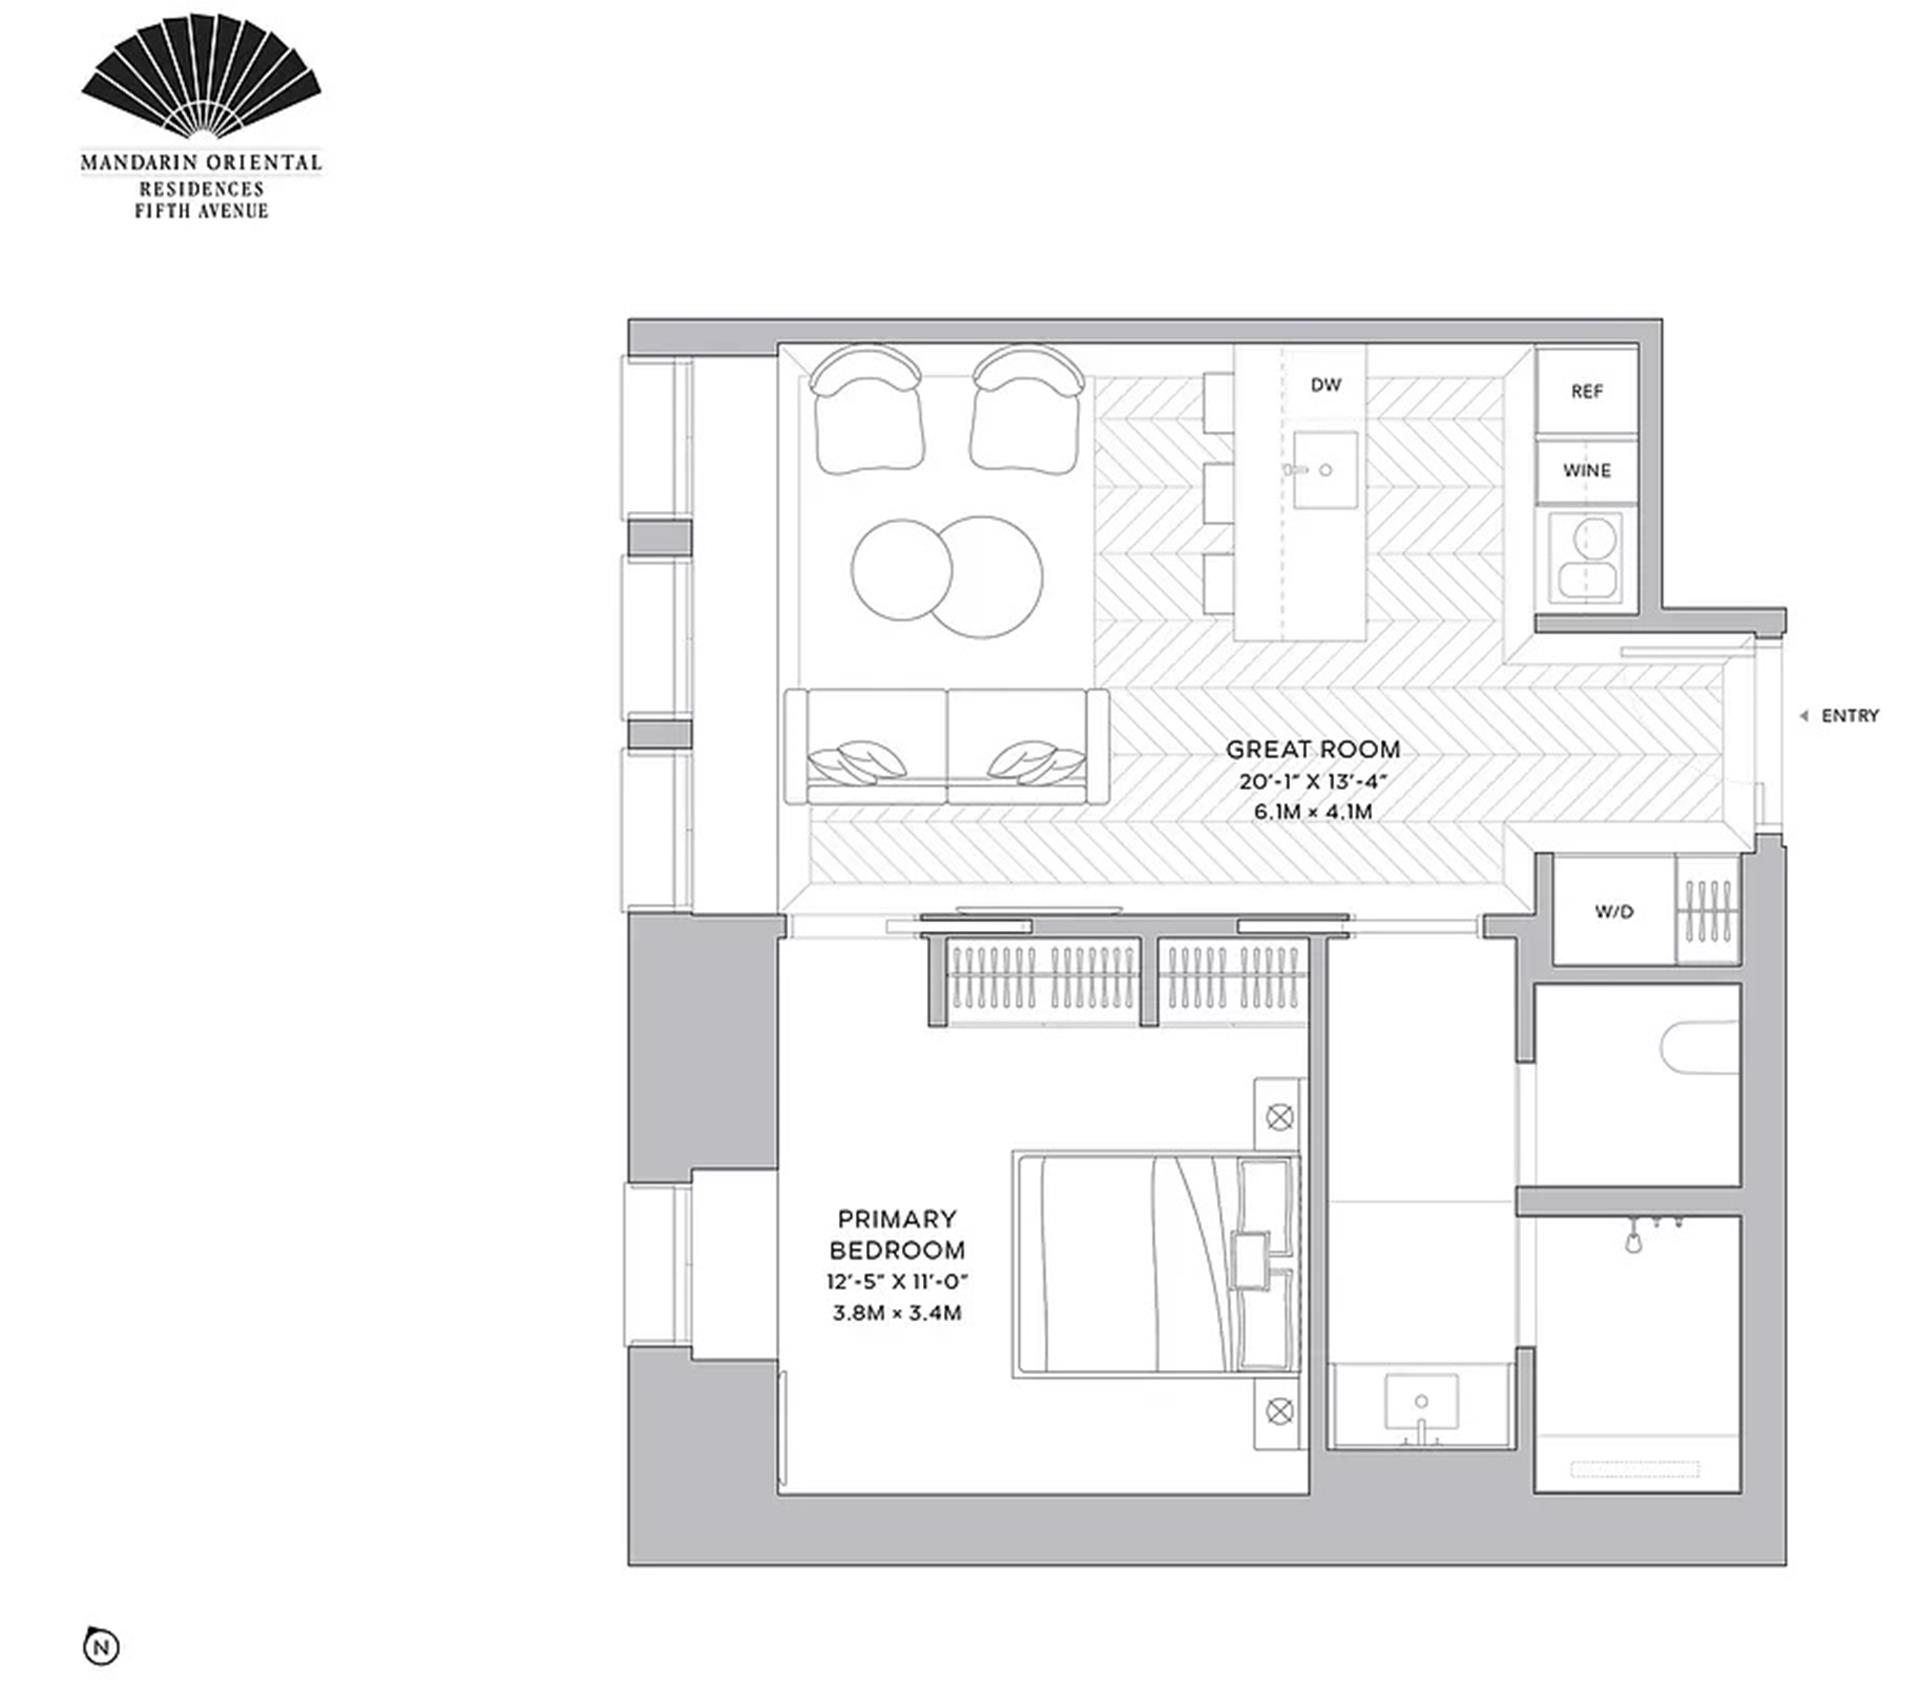 Floorplan for 685 5th Avenue, 6B